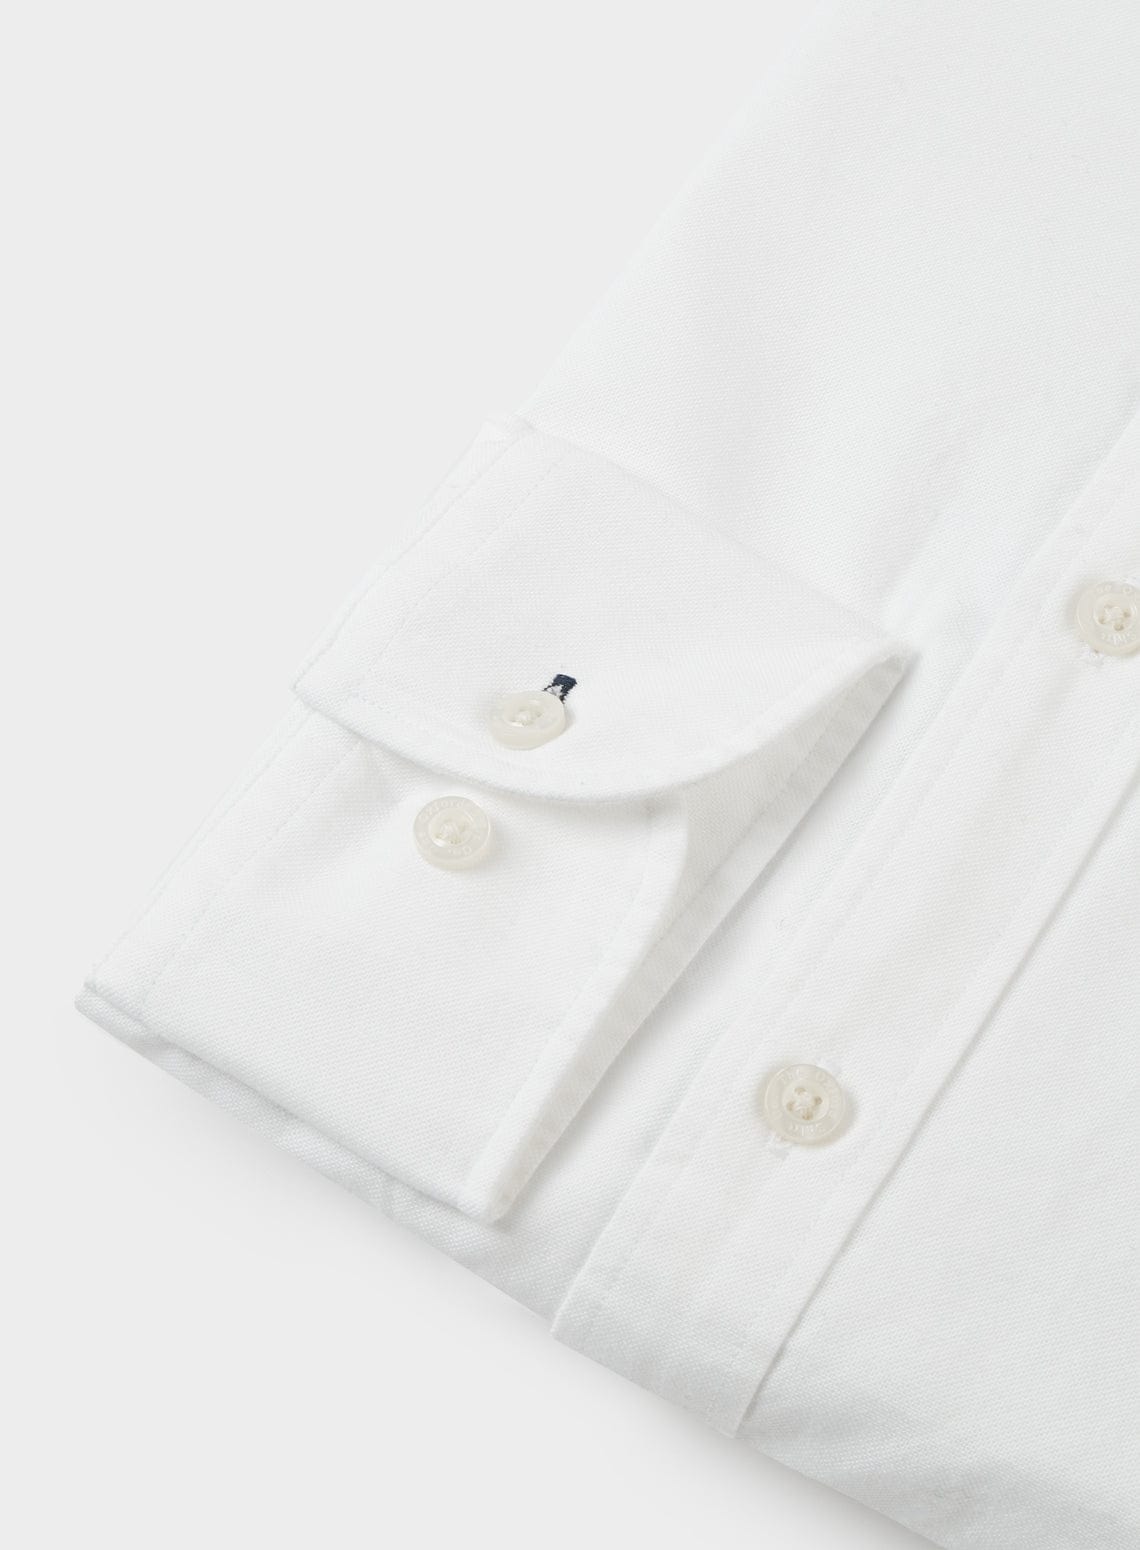 Collarless Oxford Shirt - White